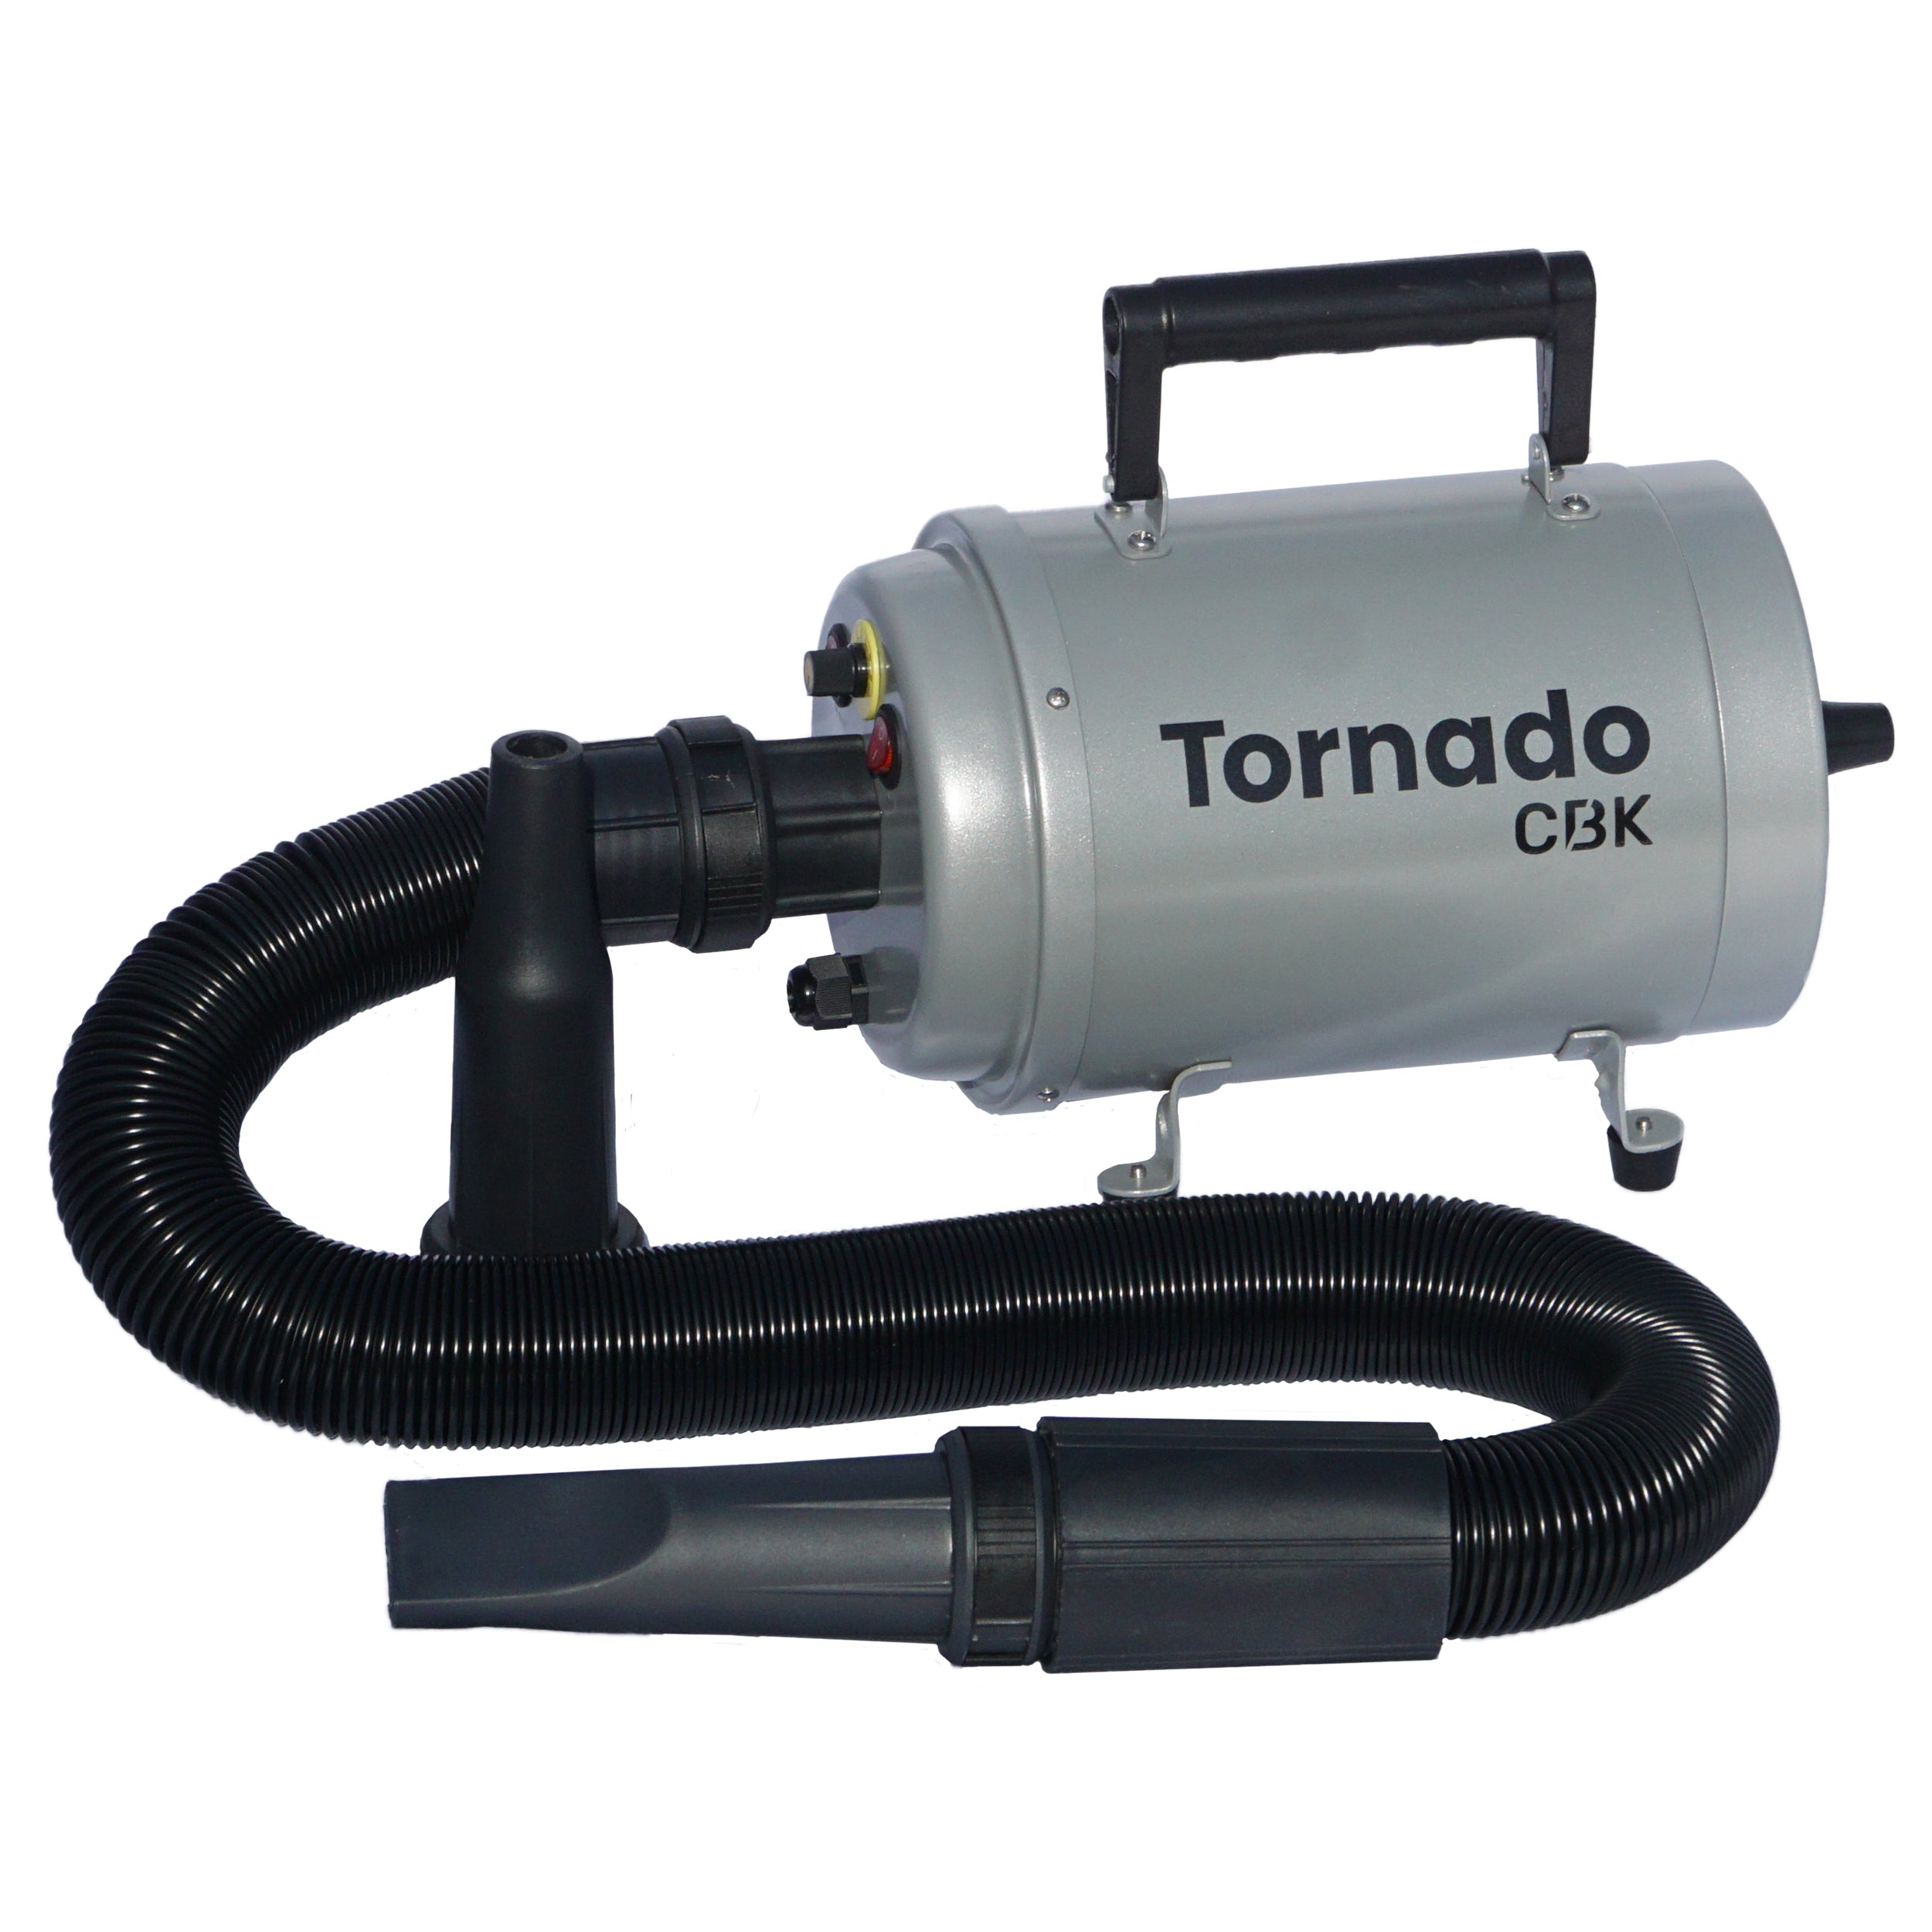 Tornado PowerDry blower - Bedst i Kraftig 2800W - vejer 5kg